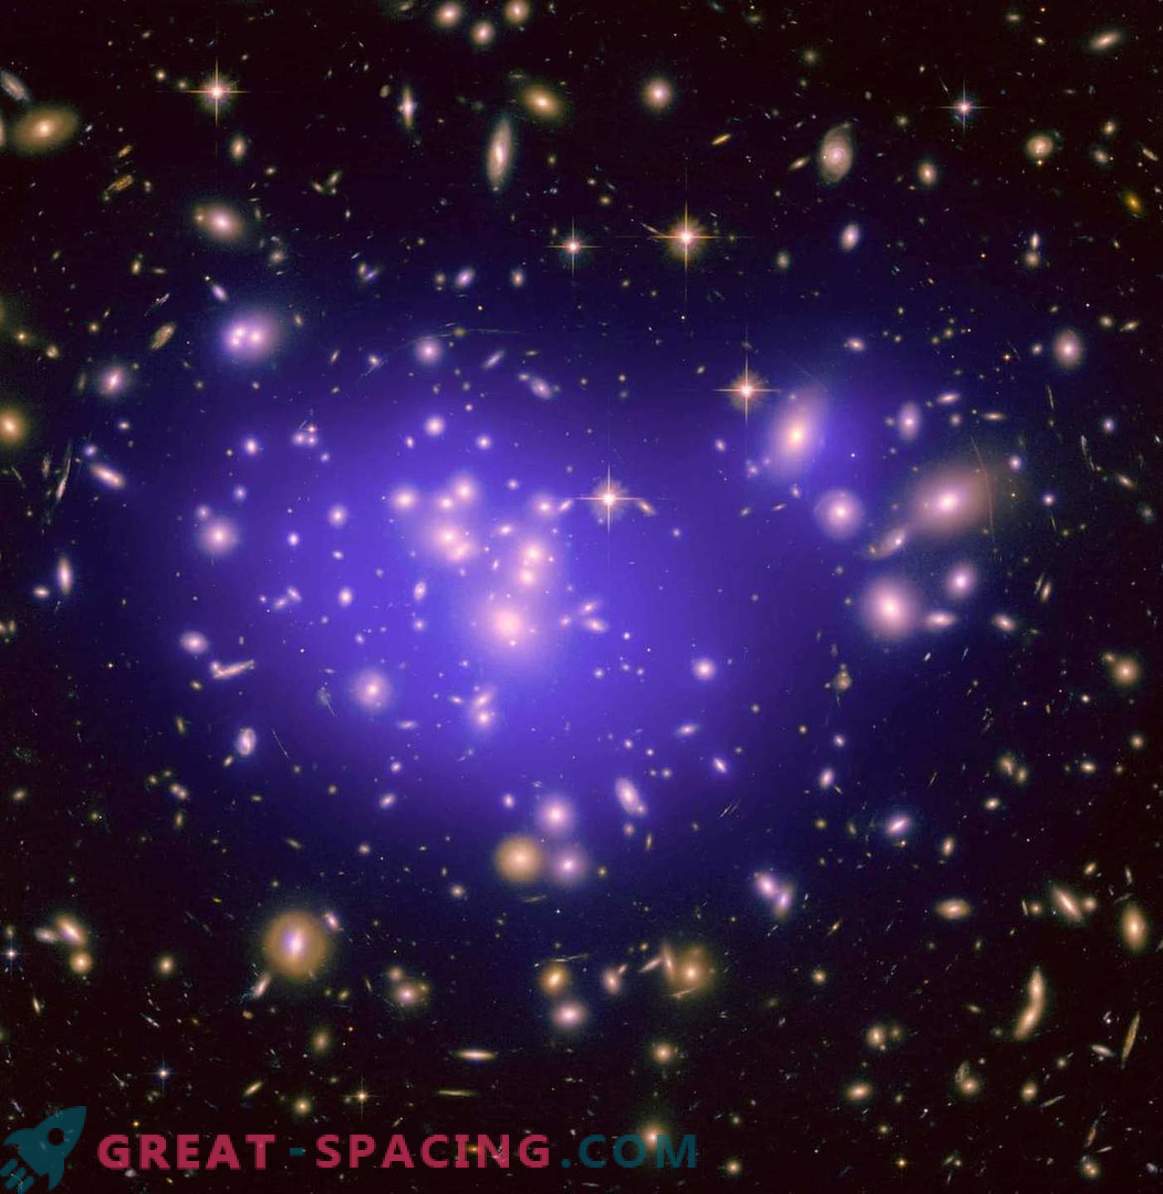 Wat eerder ontstond: melkwegstelsels of zwarte gaten